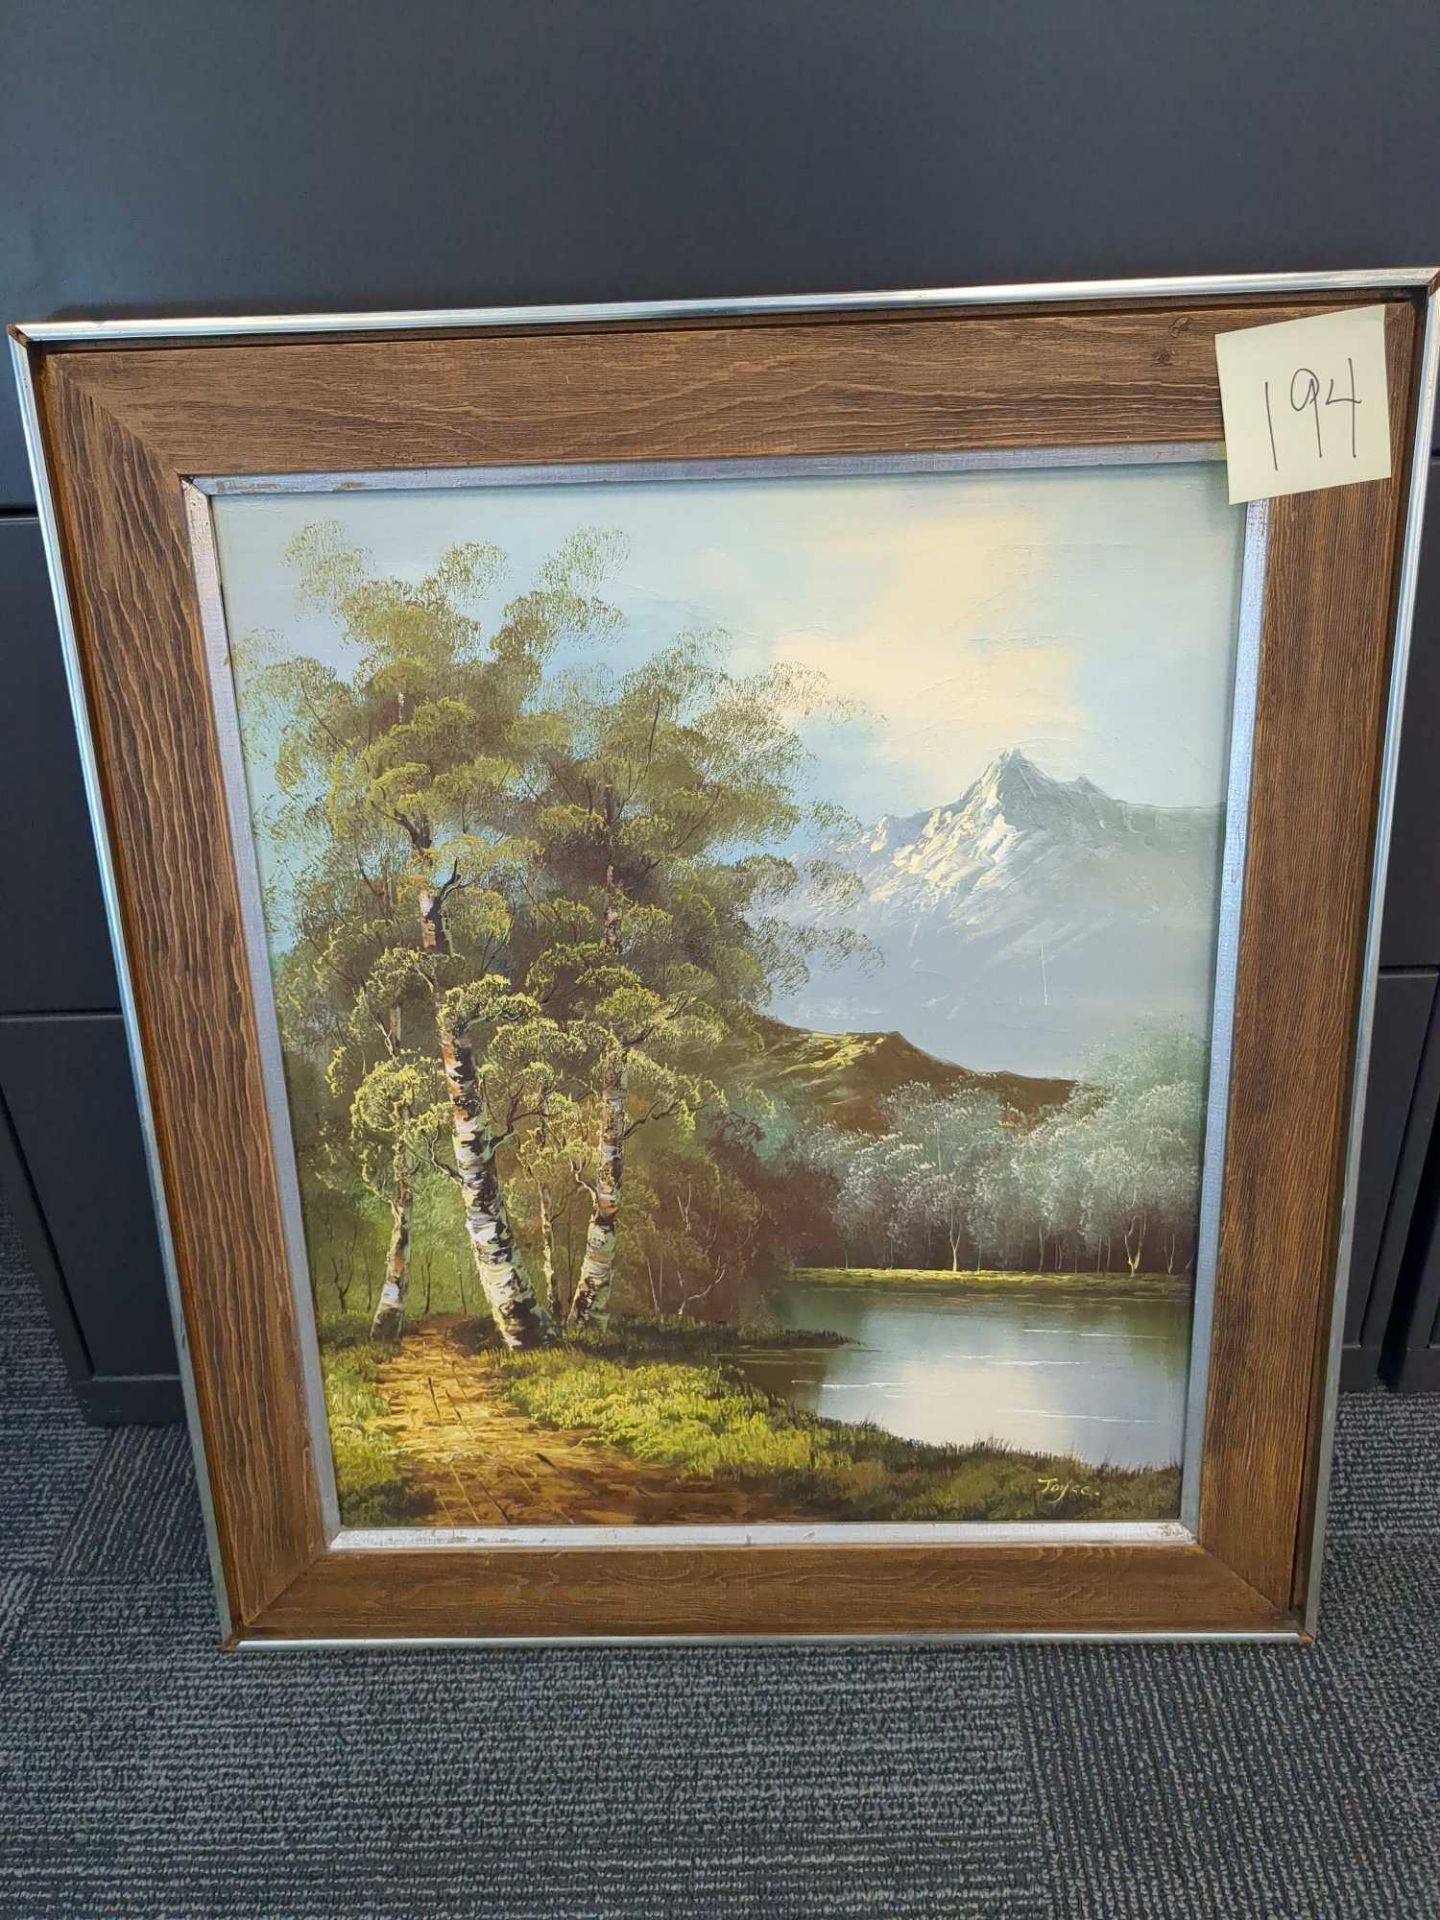 Art: Framed Oil on canvas River Mountain Scene by Joyce